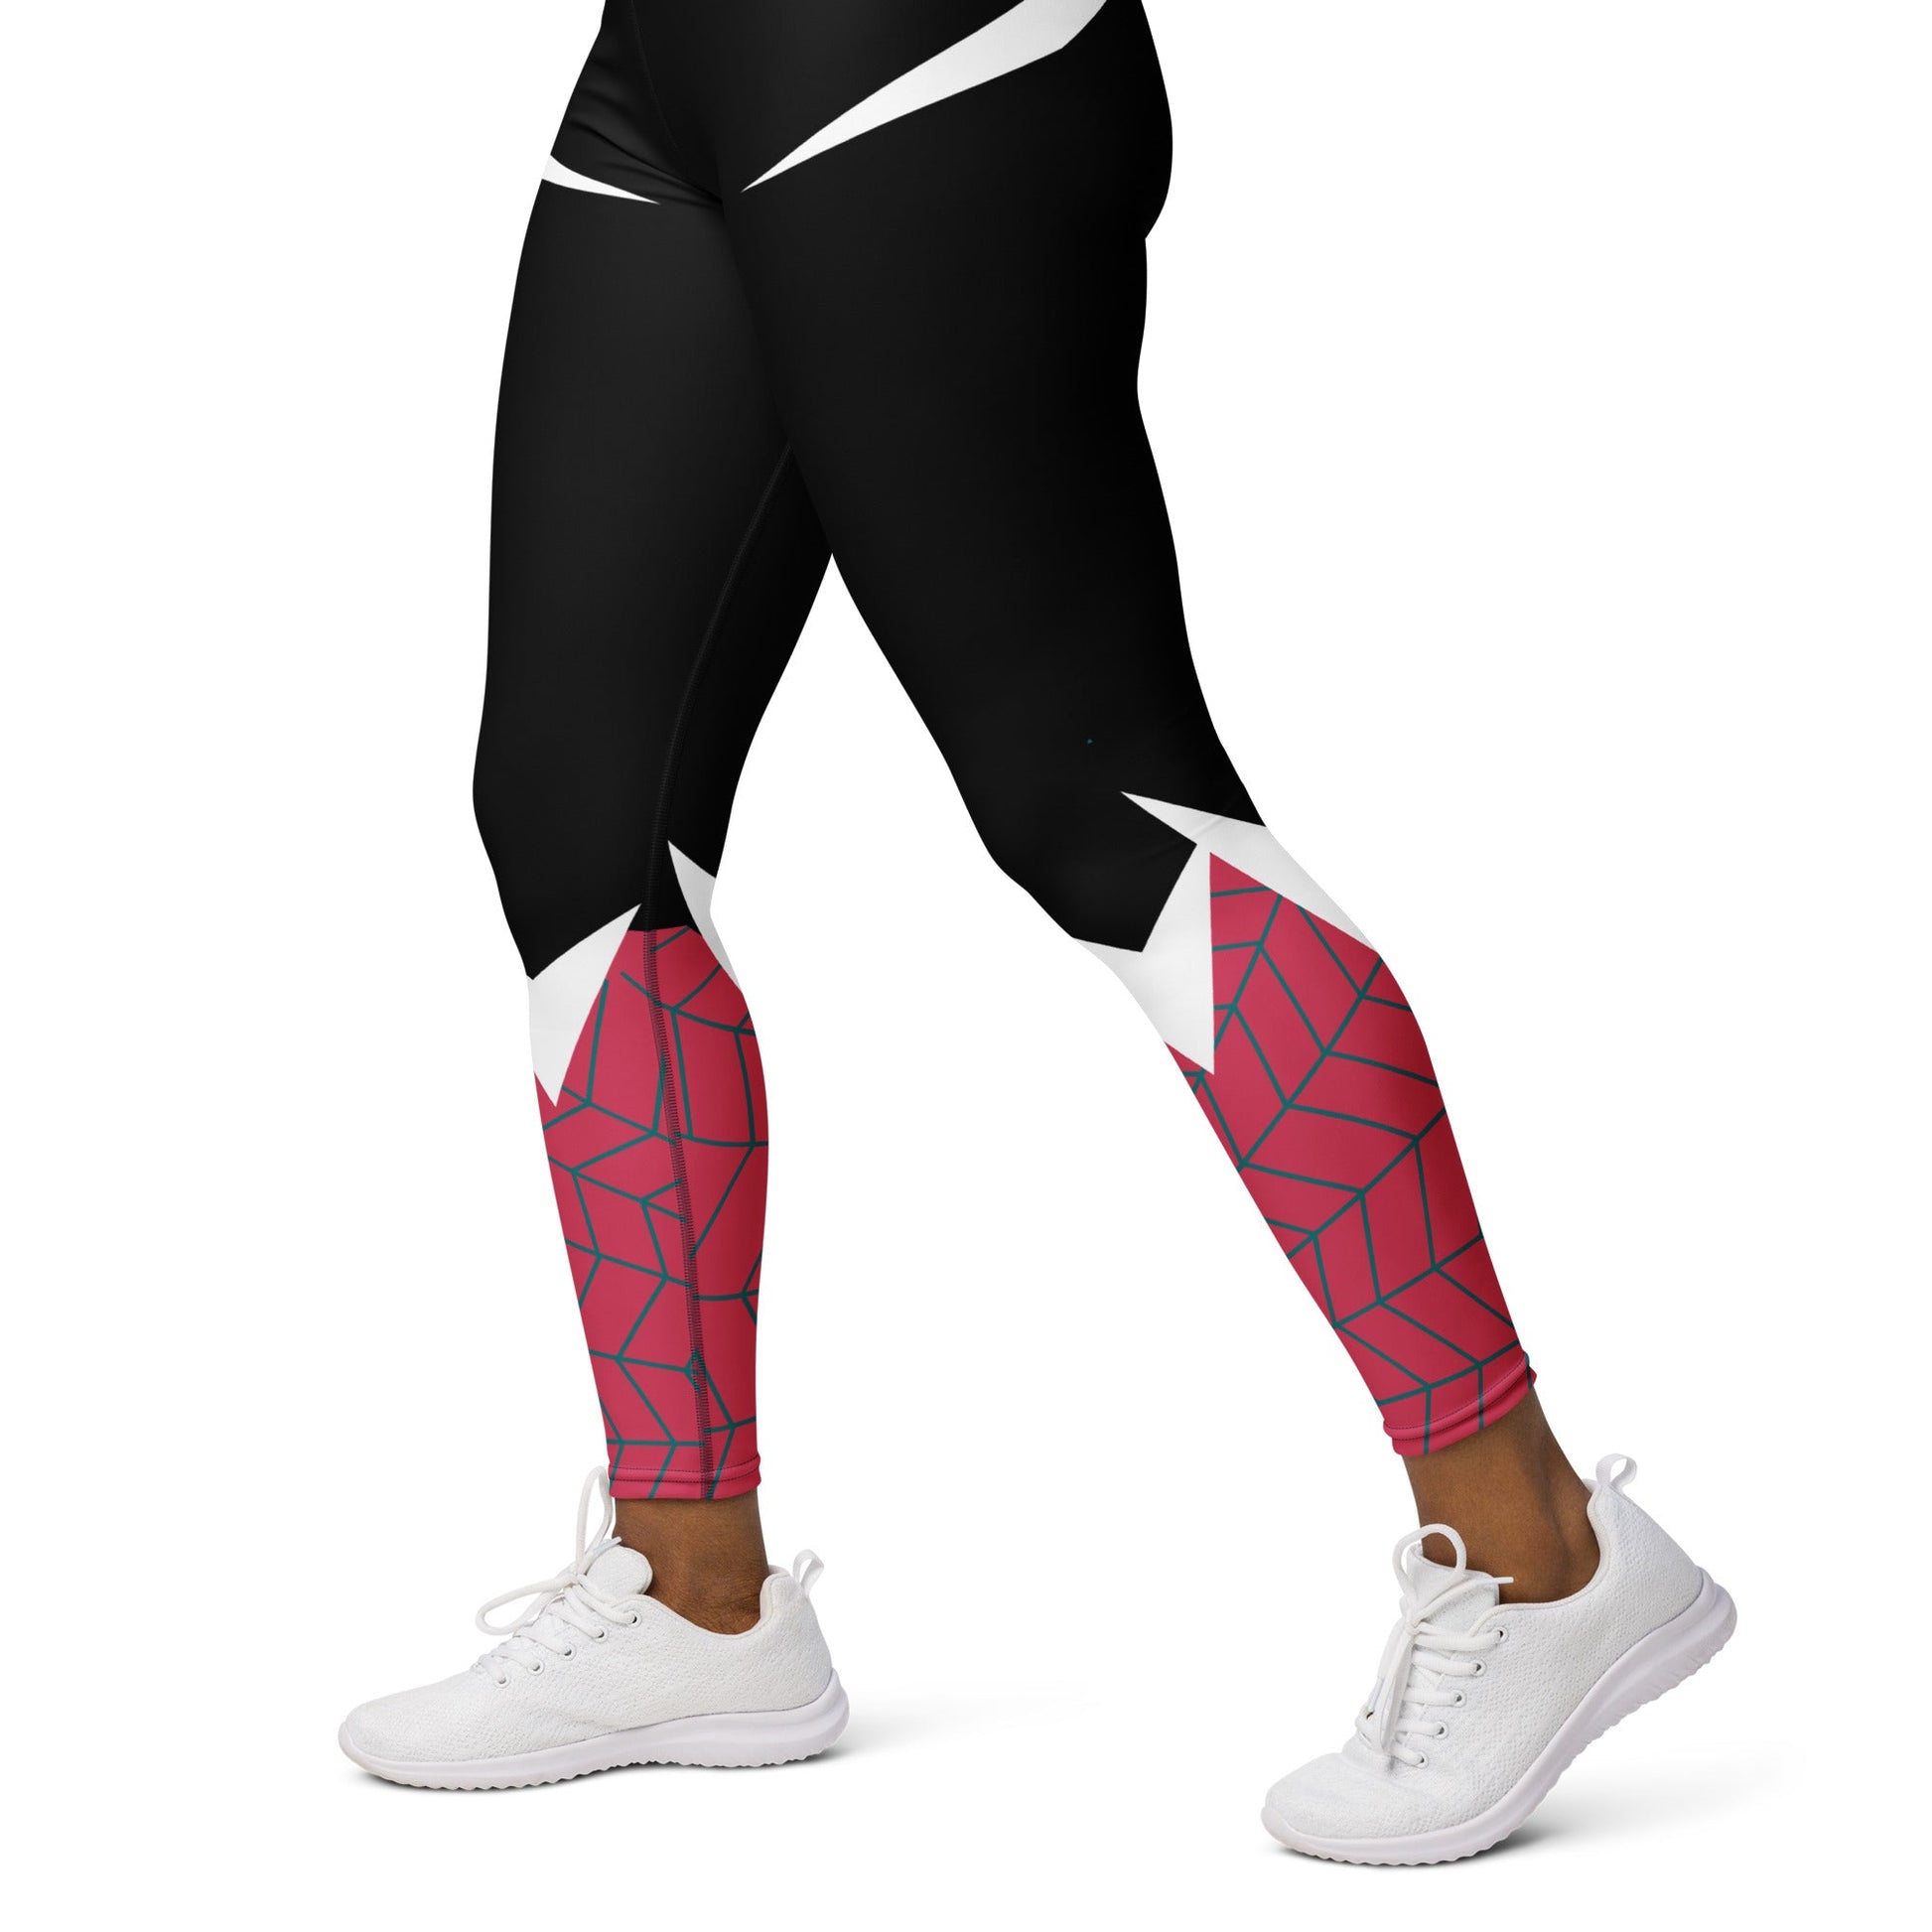 Spider Ghost Friend Yoga Leggings comic book styledisney cosplayAdult LeggingsWrong Lever Clothing